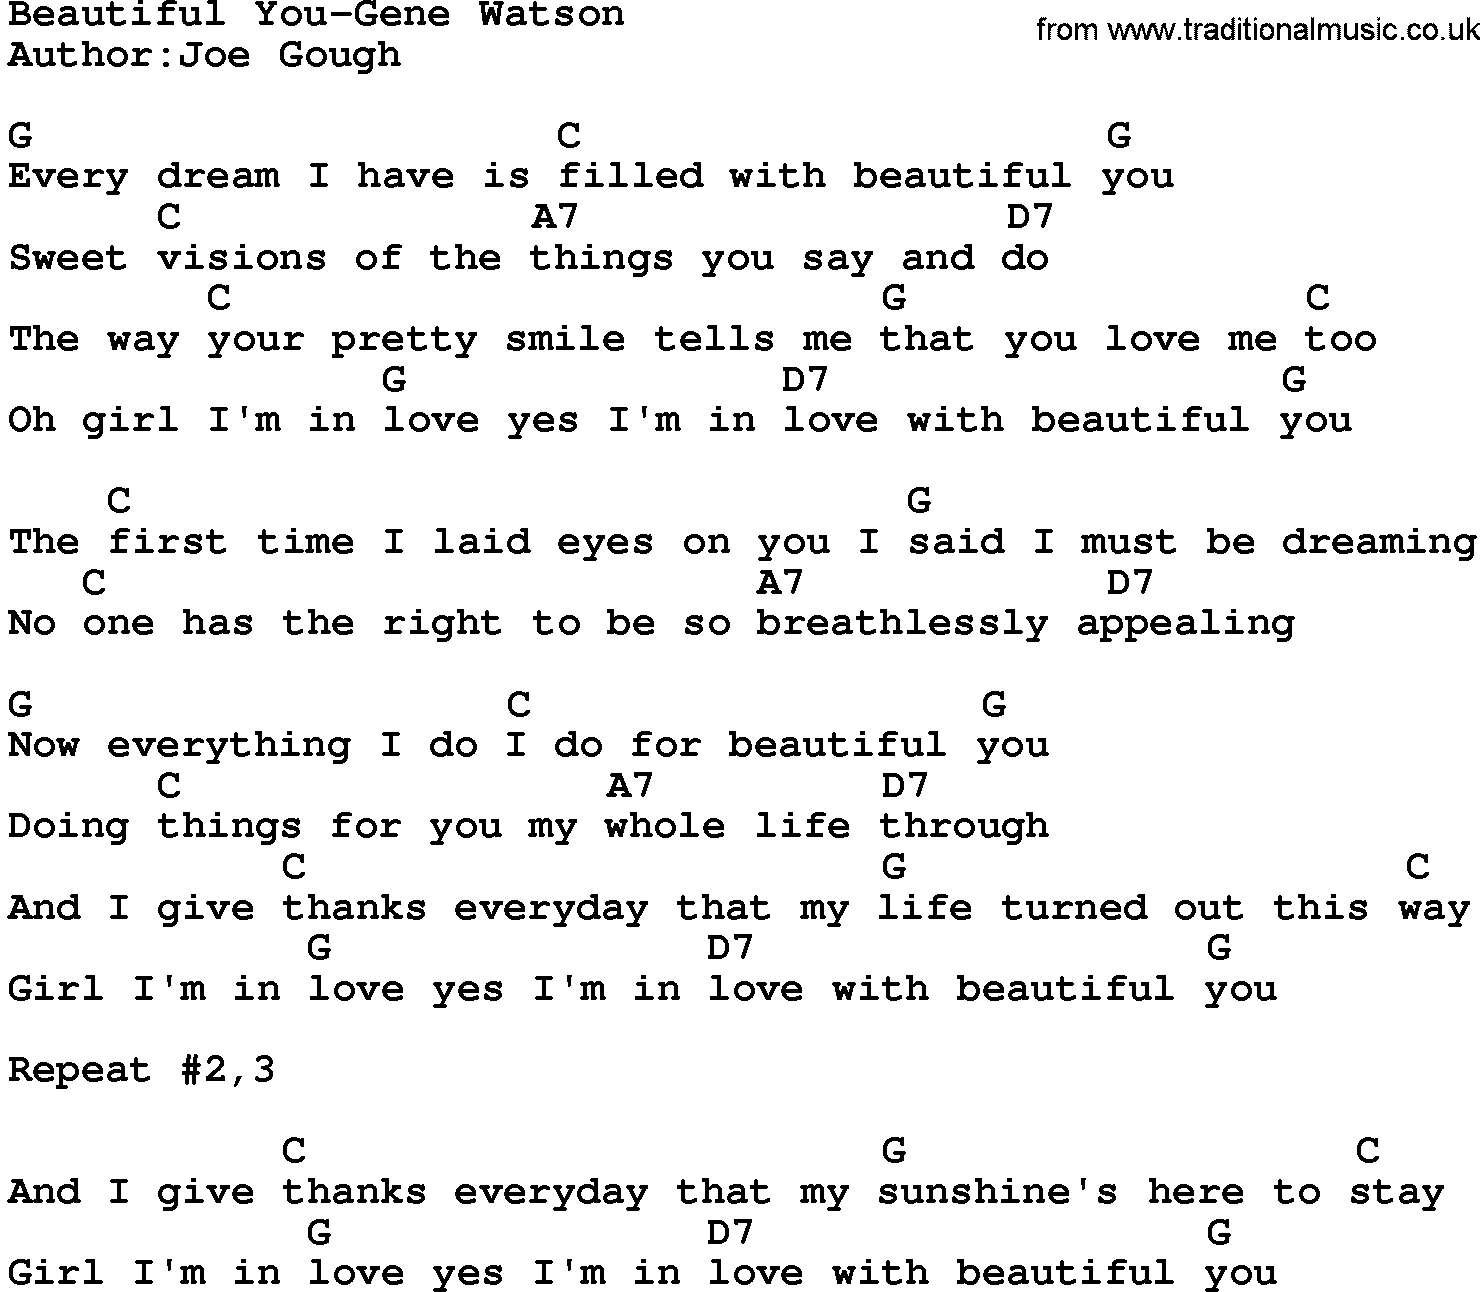 Country music song: Beautiful You-Gene Watson lyrics and chords